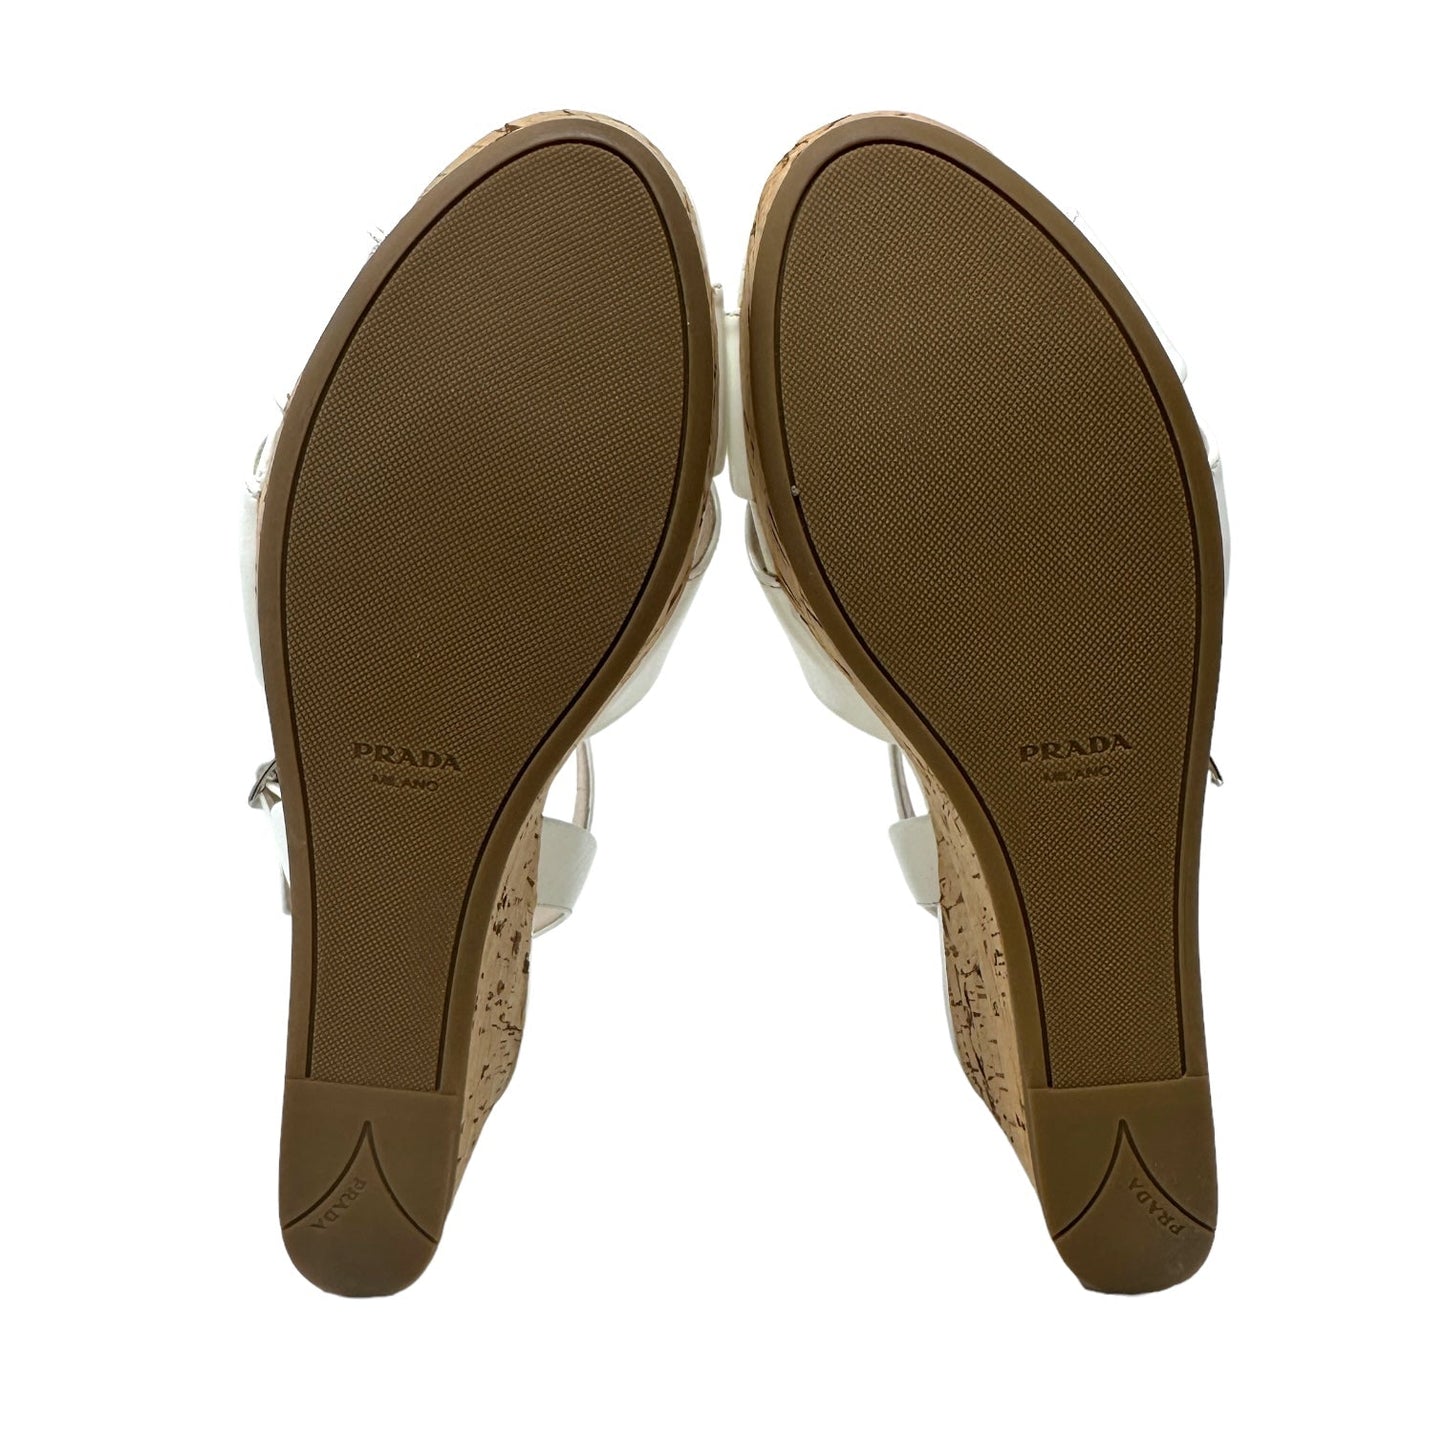 Calzature Donna Vernice 3 Patent Leather Cork Wedge Sandals, Blanco Luxury Designer By Prada  Size: 9